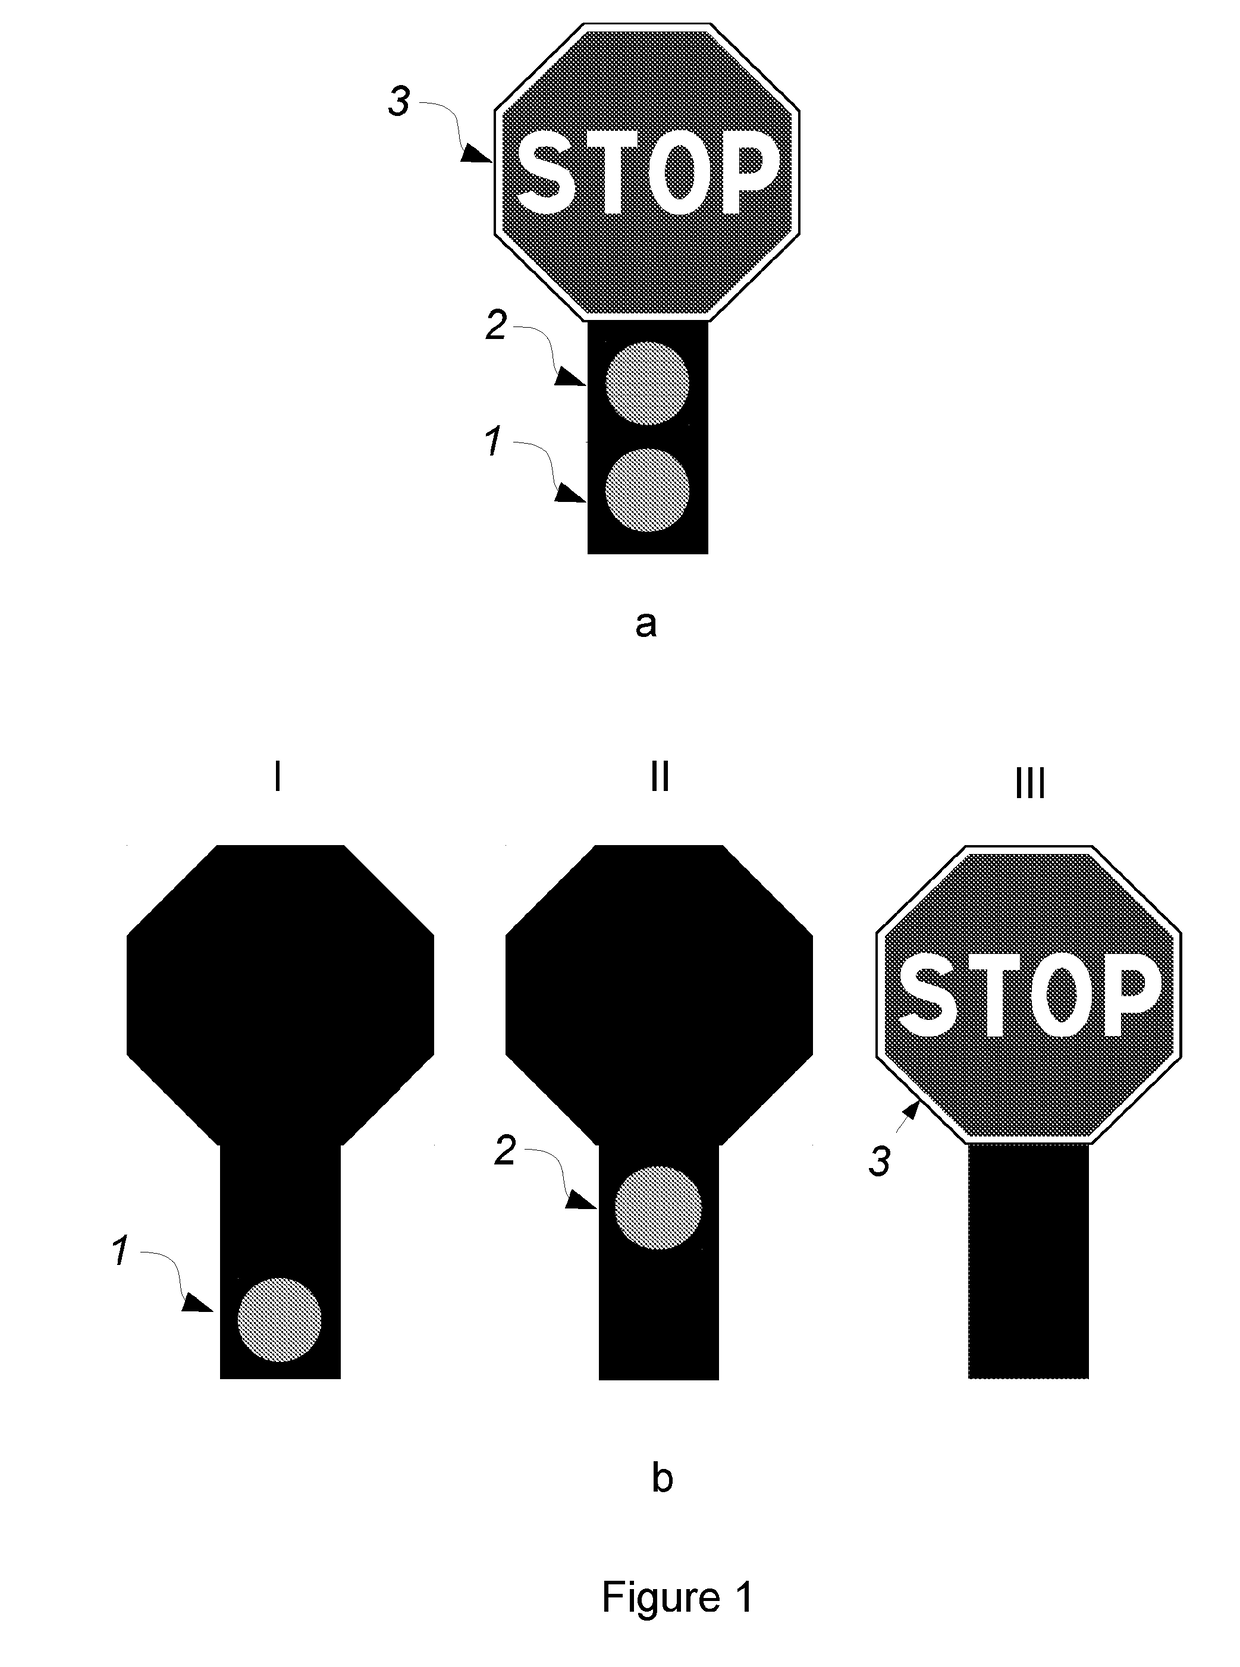 Signalling system for regulating road traffic